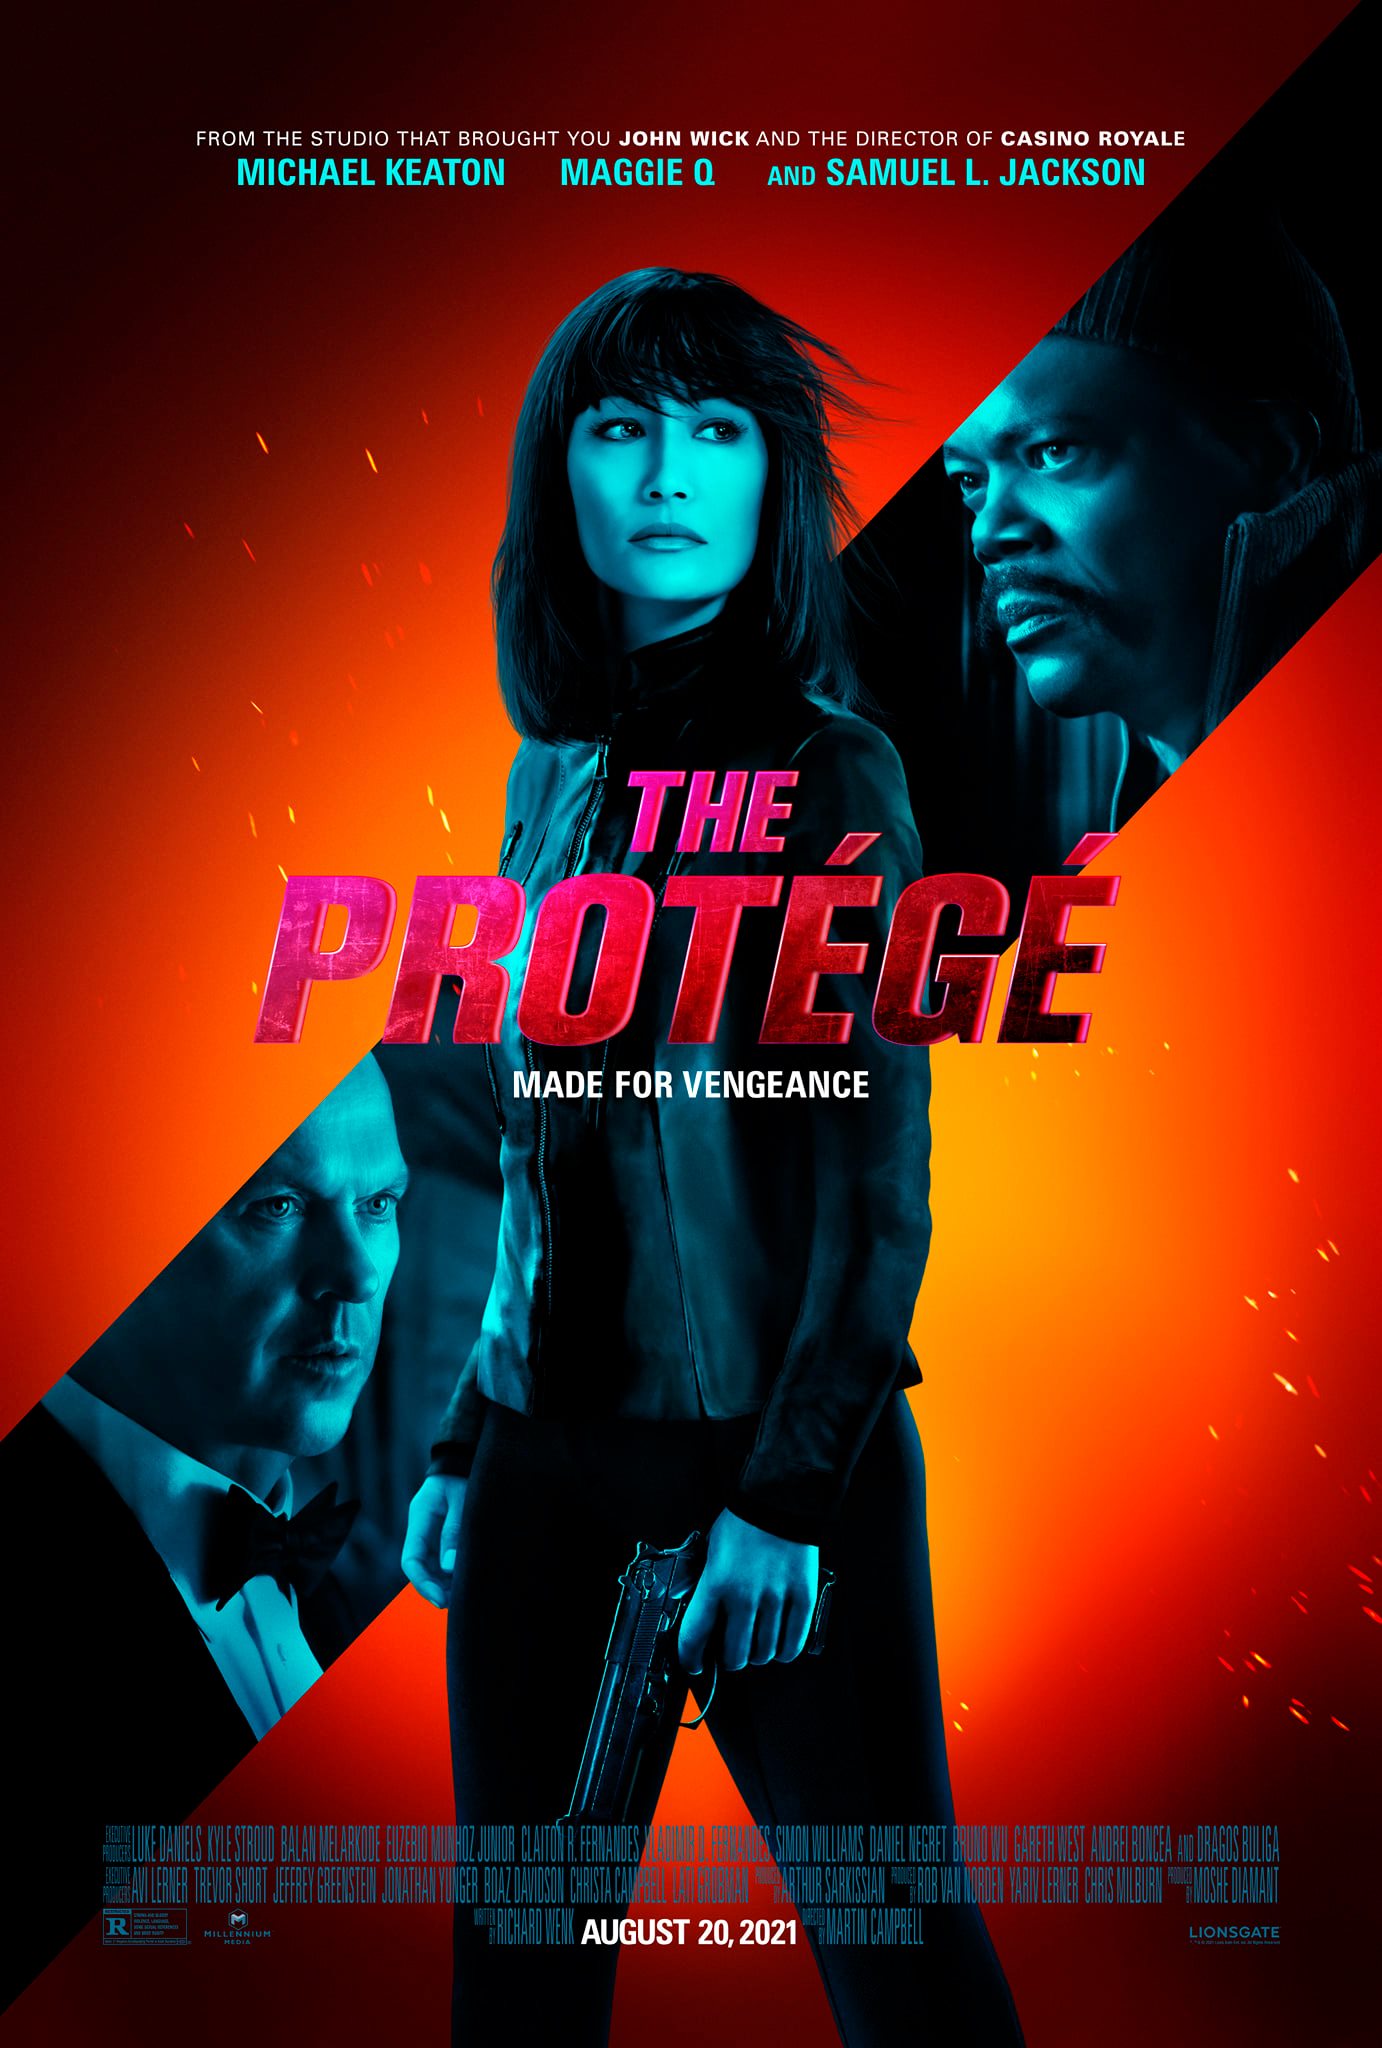 New Movie: THE PROTÉGÉ Starring Maggie Q, Samuel L. Jackson and Michael Keaton